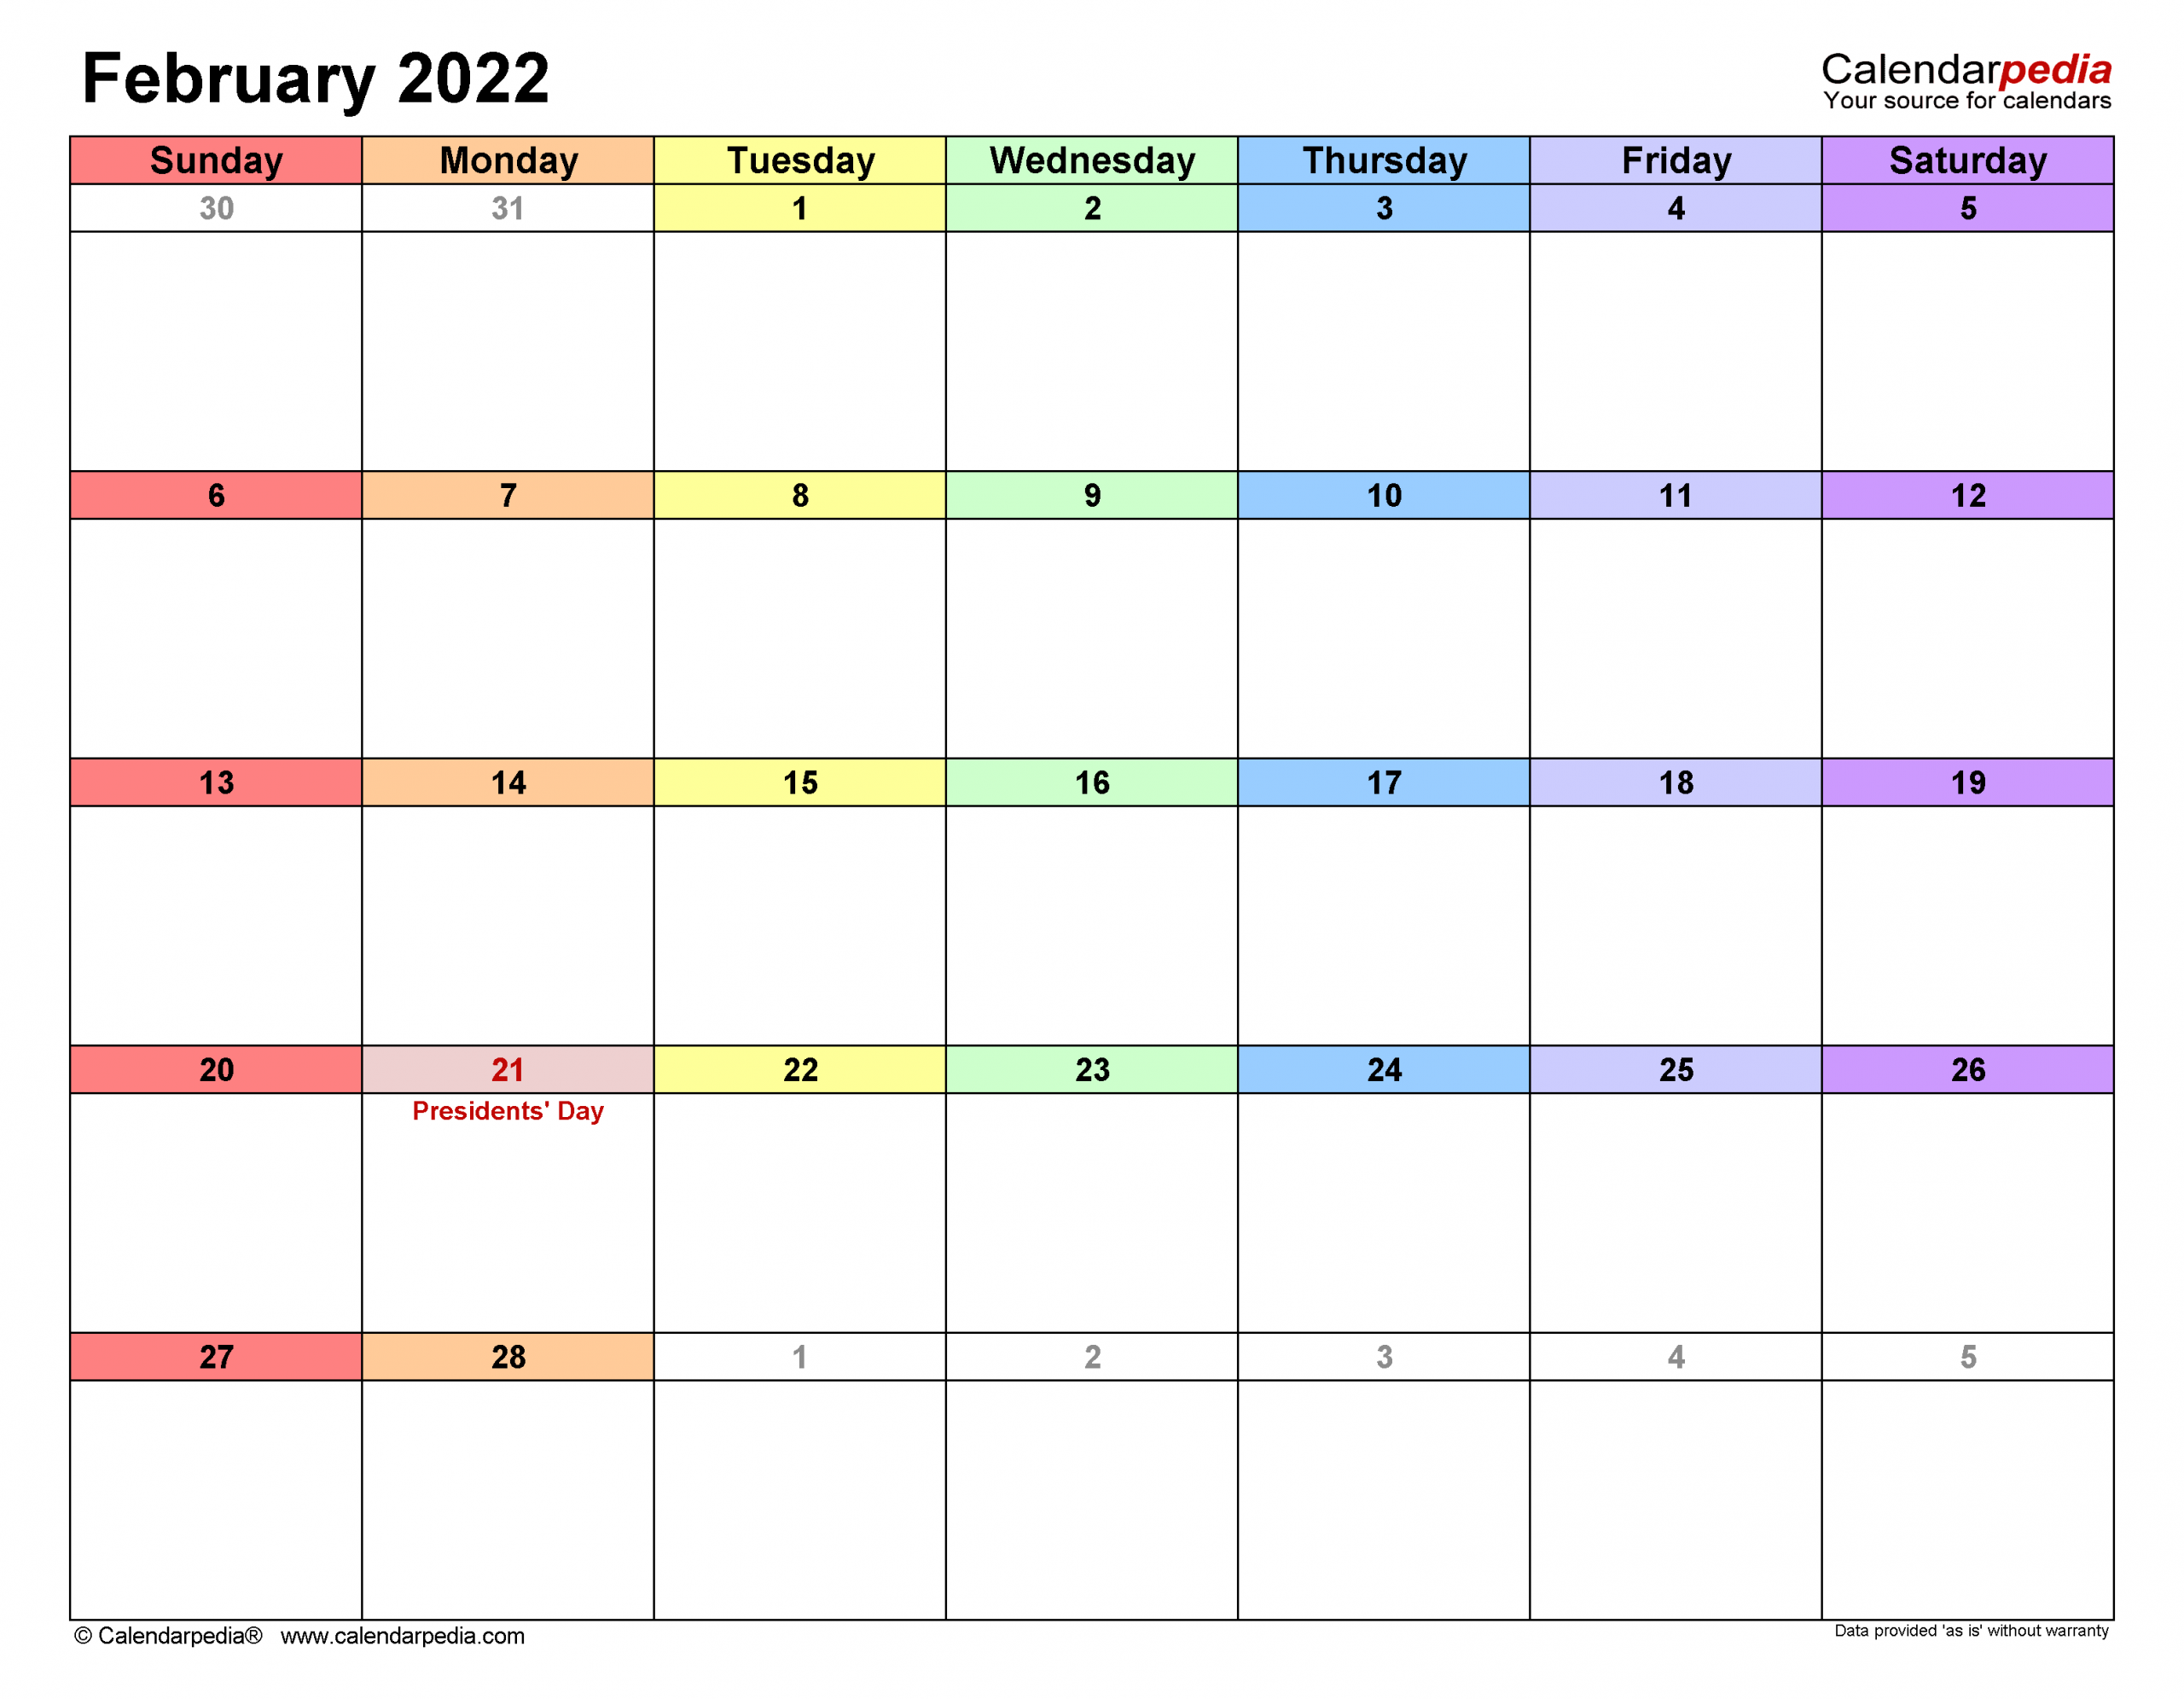 I Never Knew This Did You February 2022 Calendar Link